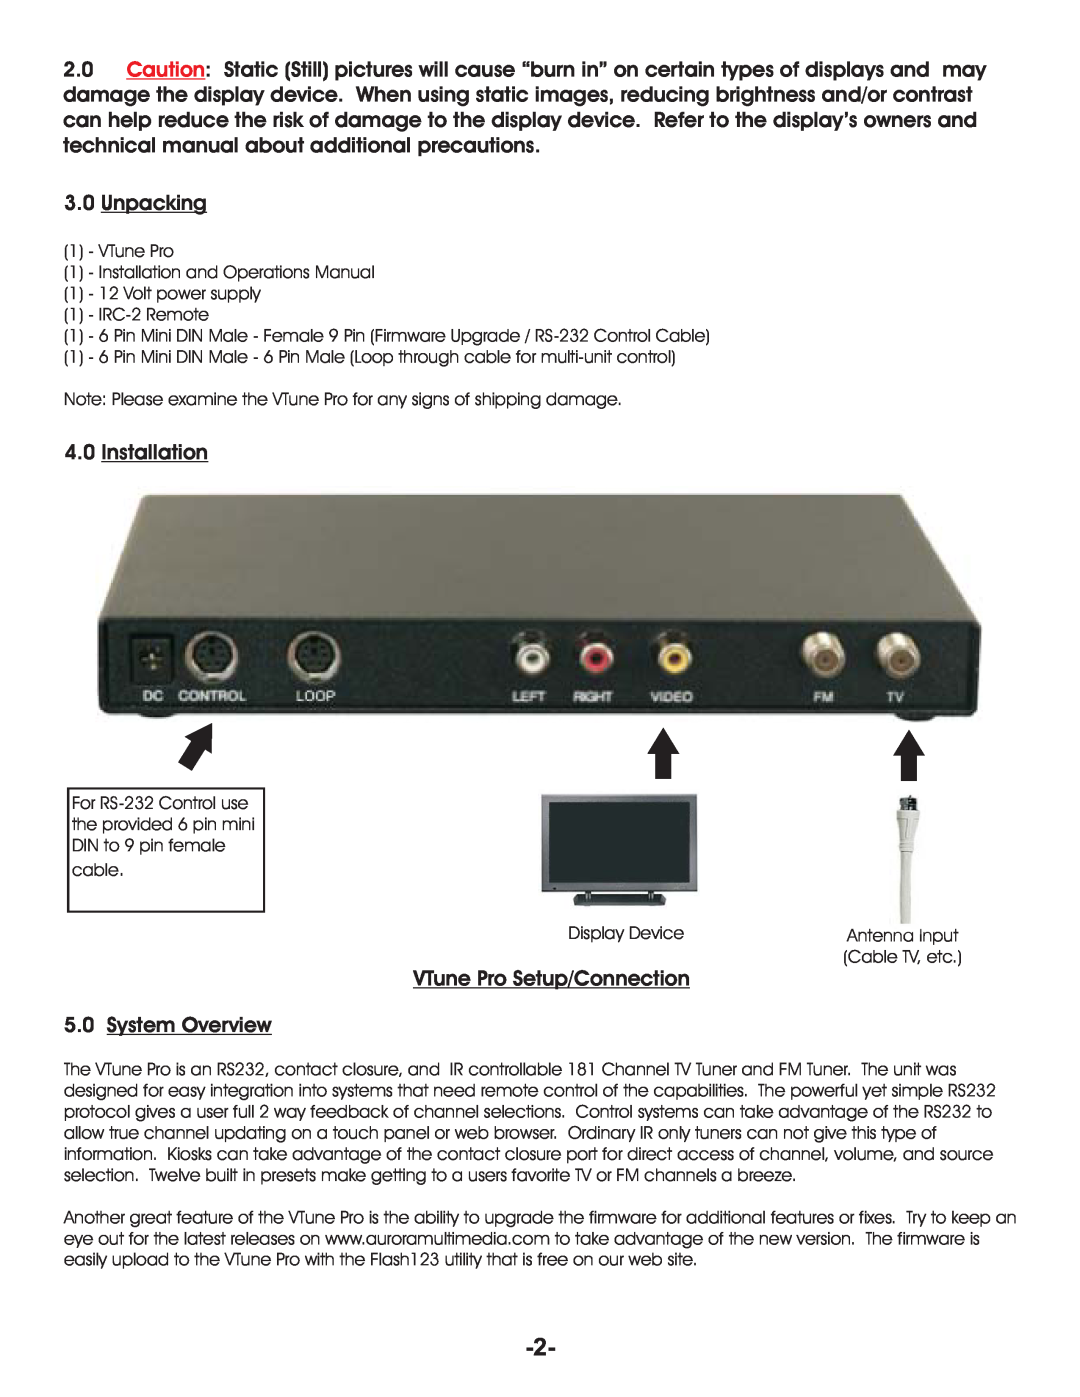 Aurora Multimedia TV/FM Tuner manual 3.0Unpacking, 4.0Installation, VTune Pro Setup/Connection 5.0System Overview 